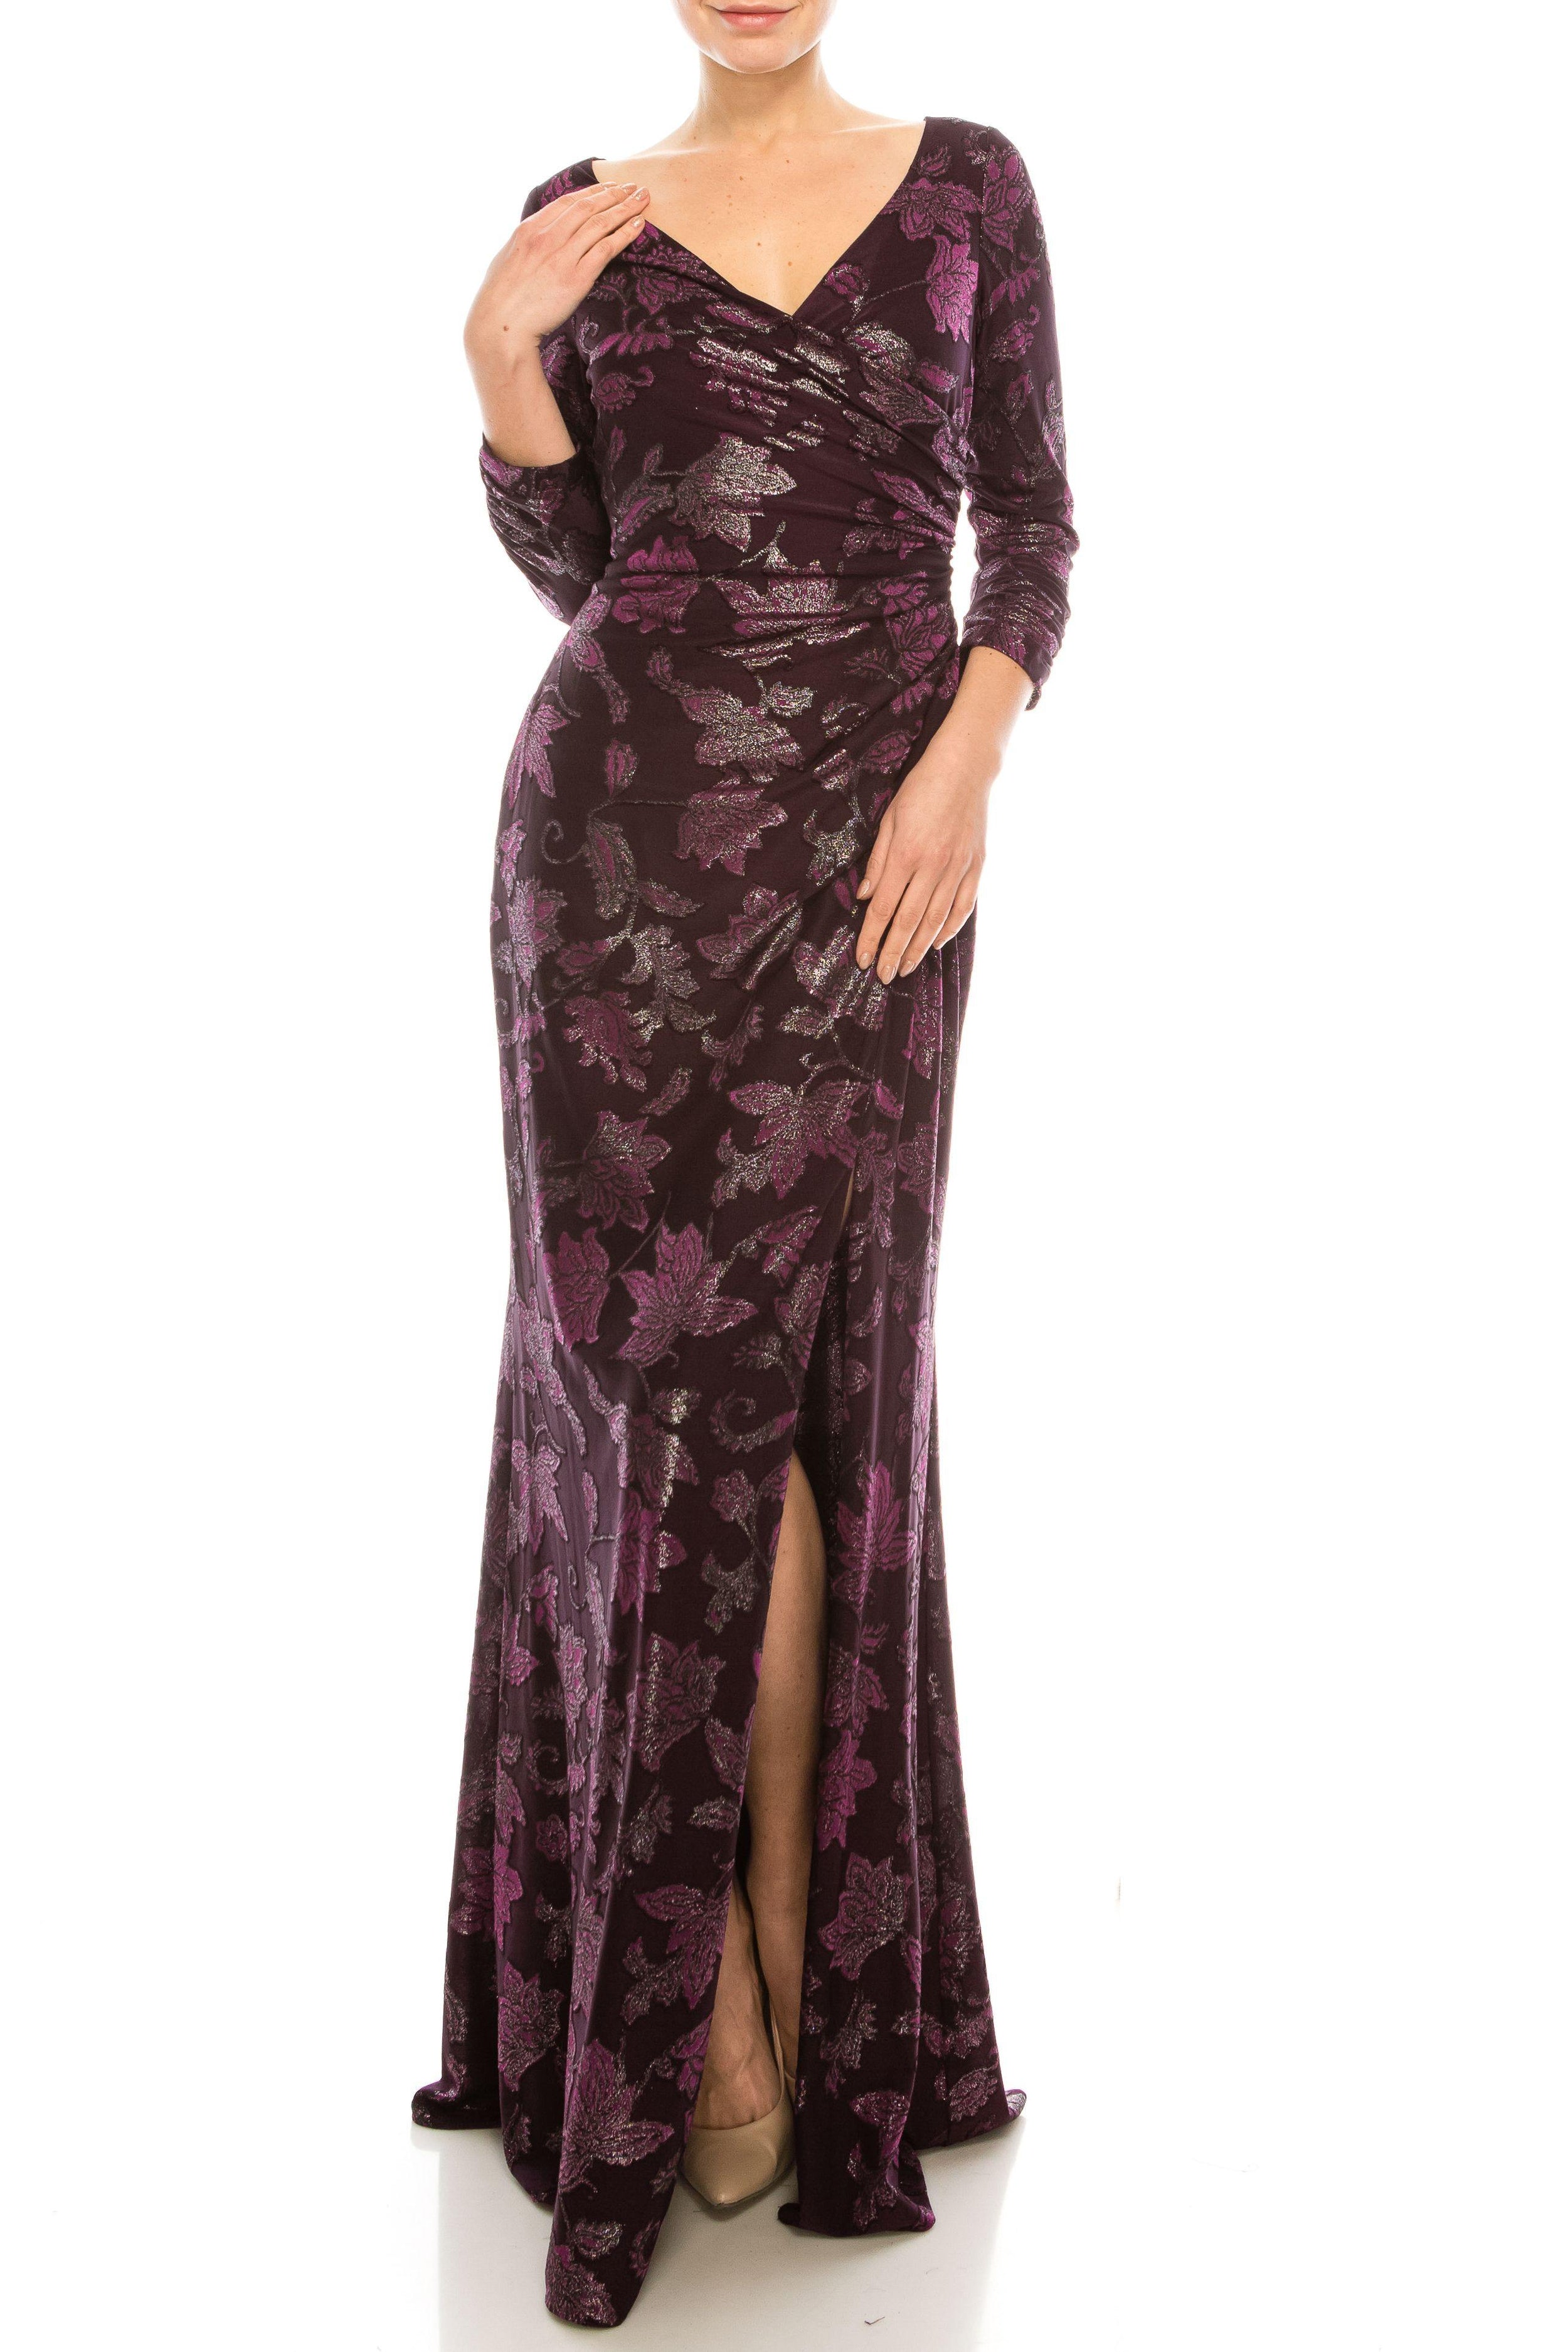 Adrianna Papell Long Formal Sheath Dress AP1E206702 - The Dress Outlet